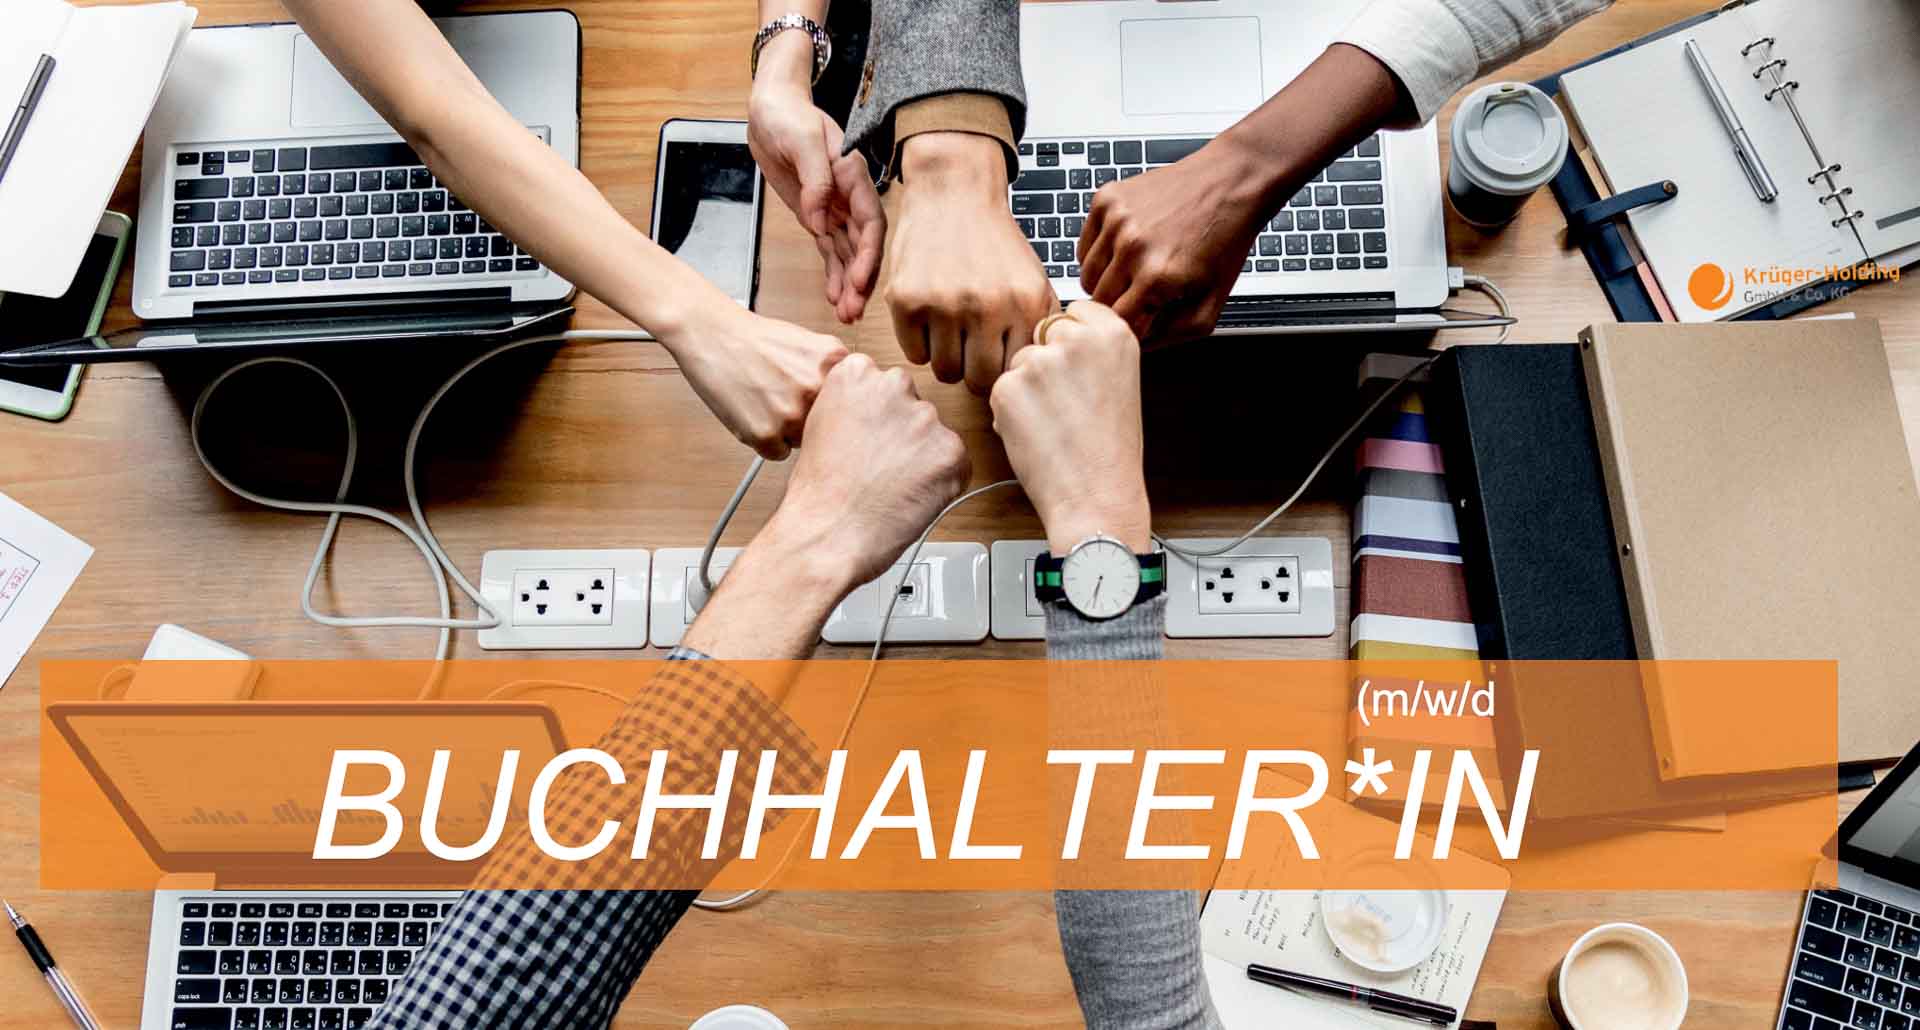 BUCHHALTER*IN (m/w/d) in Bernau - Krüger-Holding GmbH & Co. KG